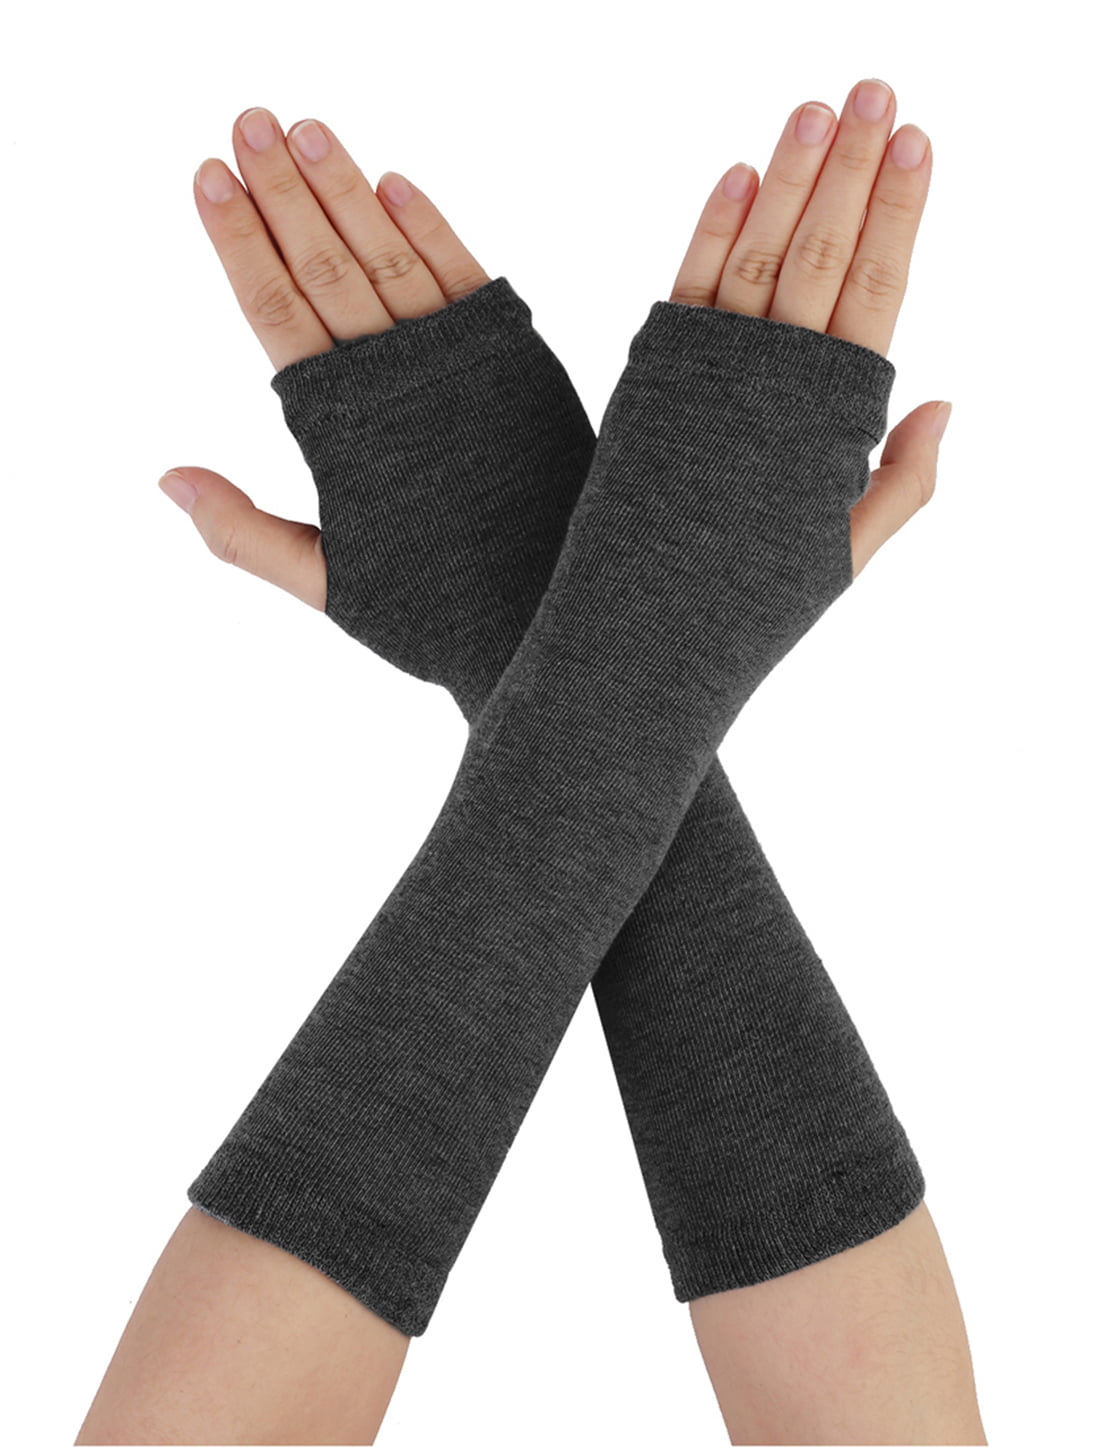 Accessories Gloves & Mittens Arm Warmers Light Grey pure cashmere fingerless long wrist warmer gloves 